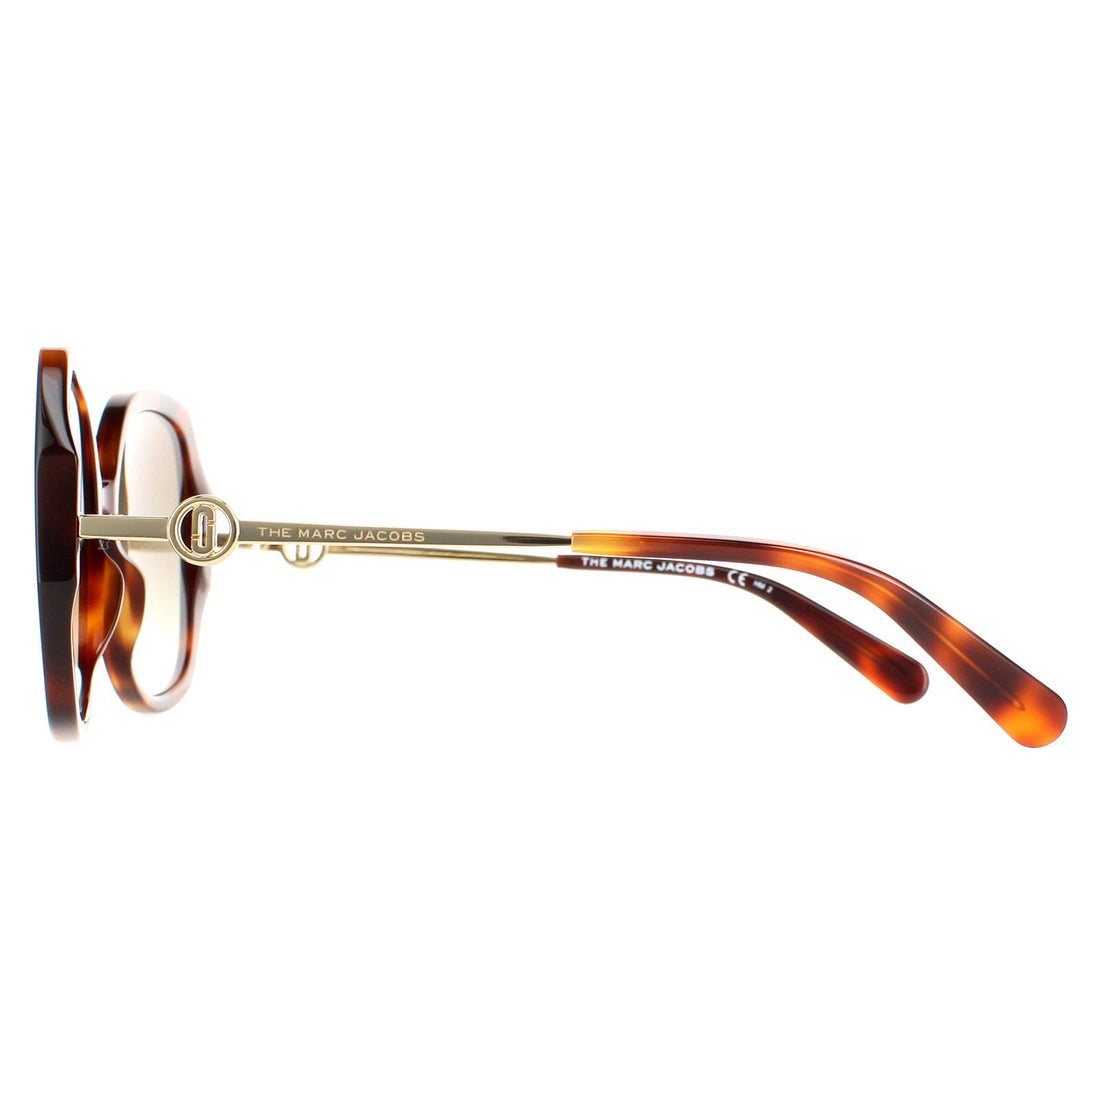 Marc Jacobs Sunglasses MARC 581/S 05L HA Havana Brown Gradient